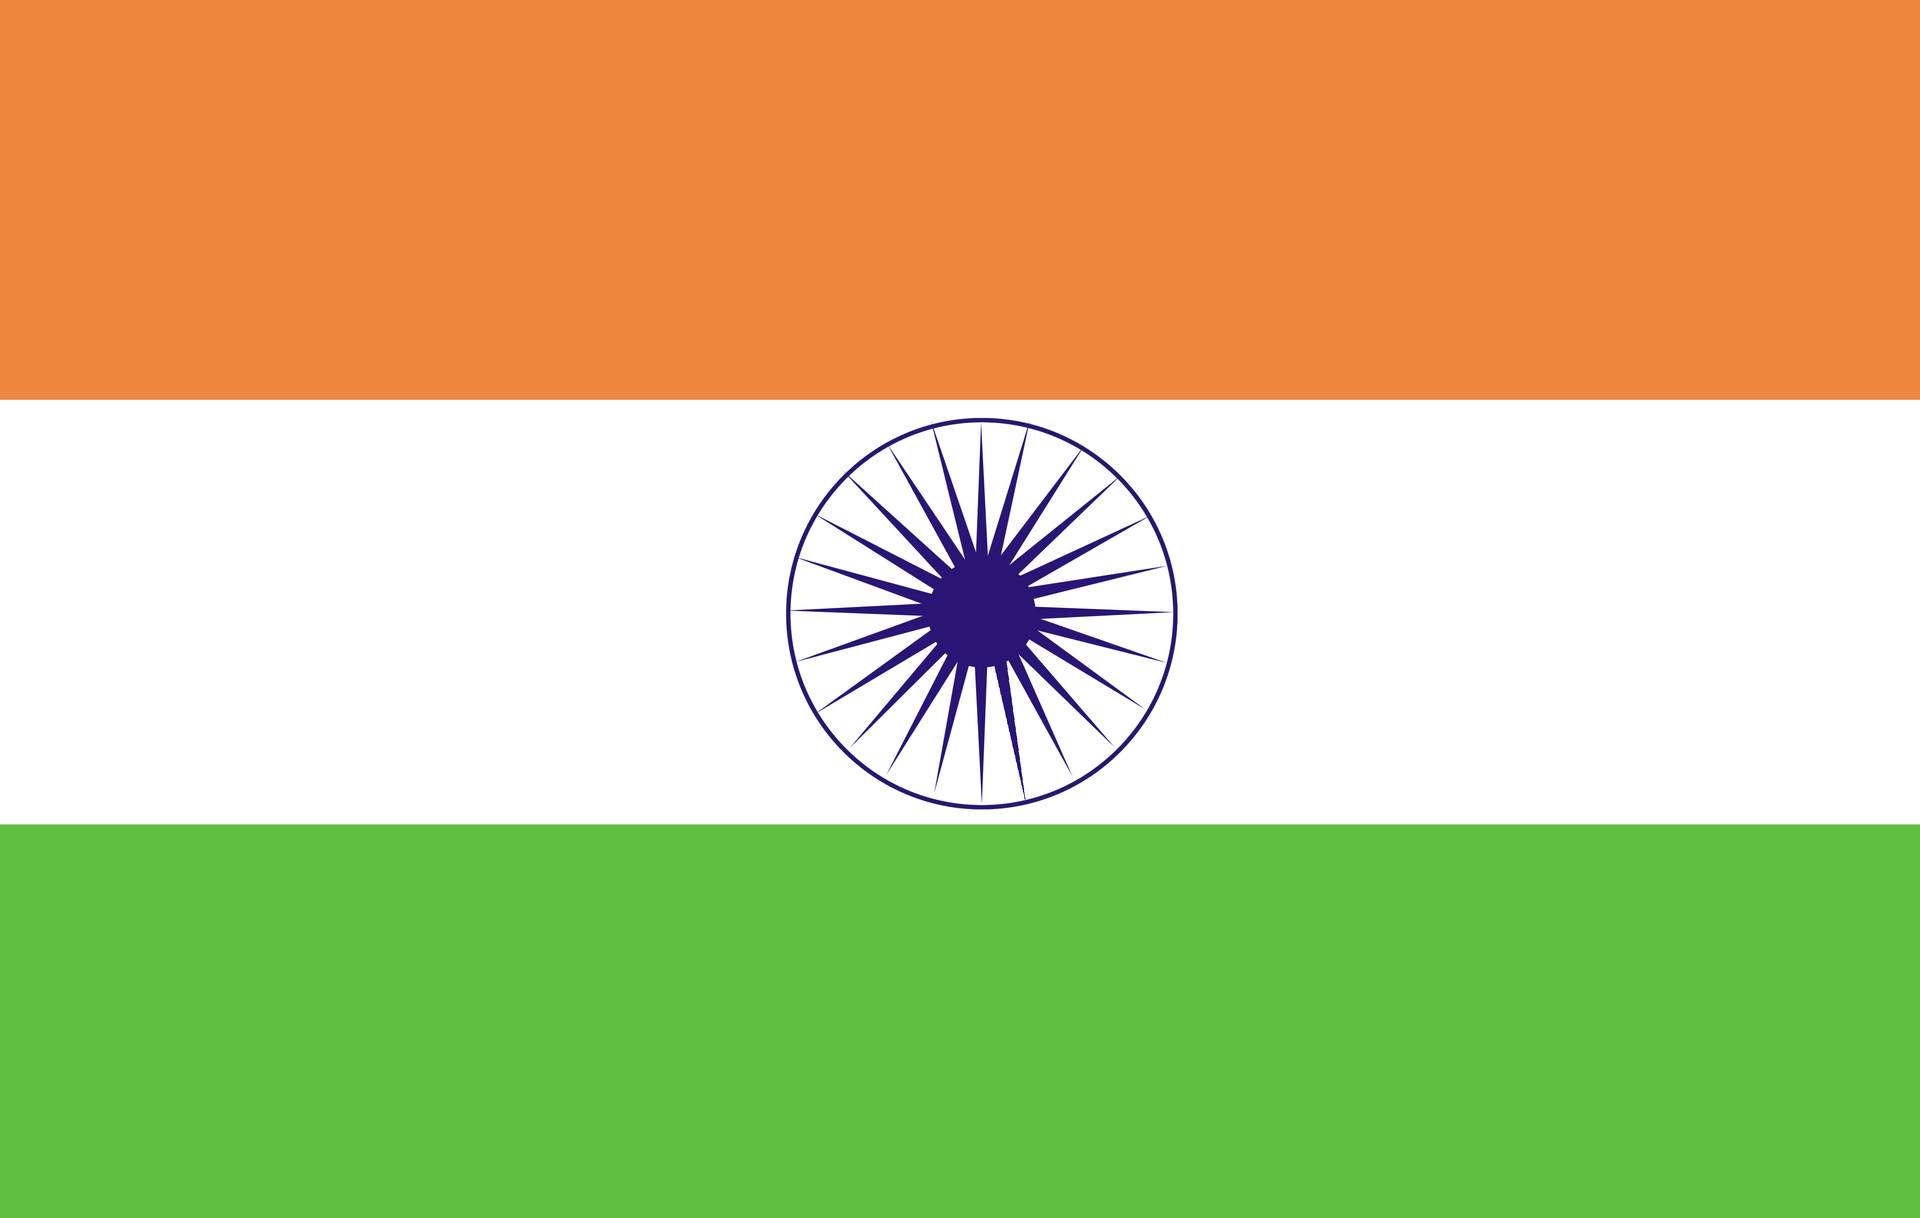 India Flag Texture Image & Photo (Free Trial) | Bigstock